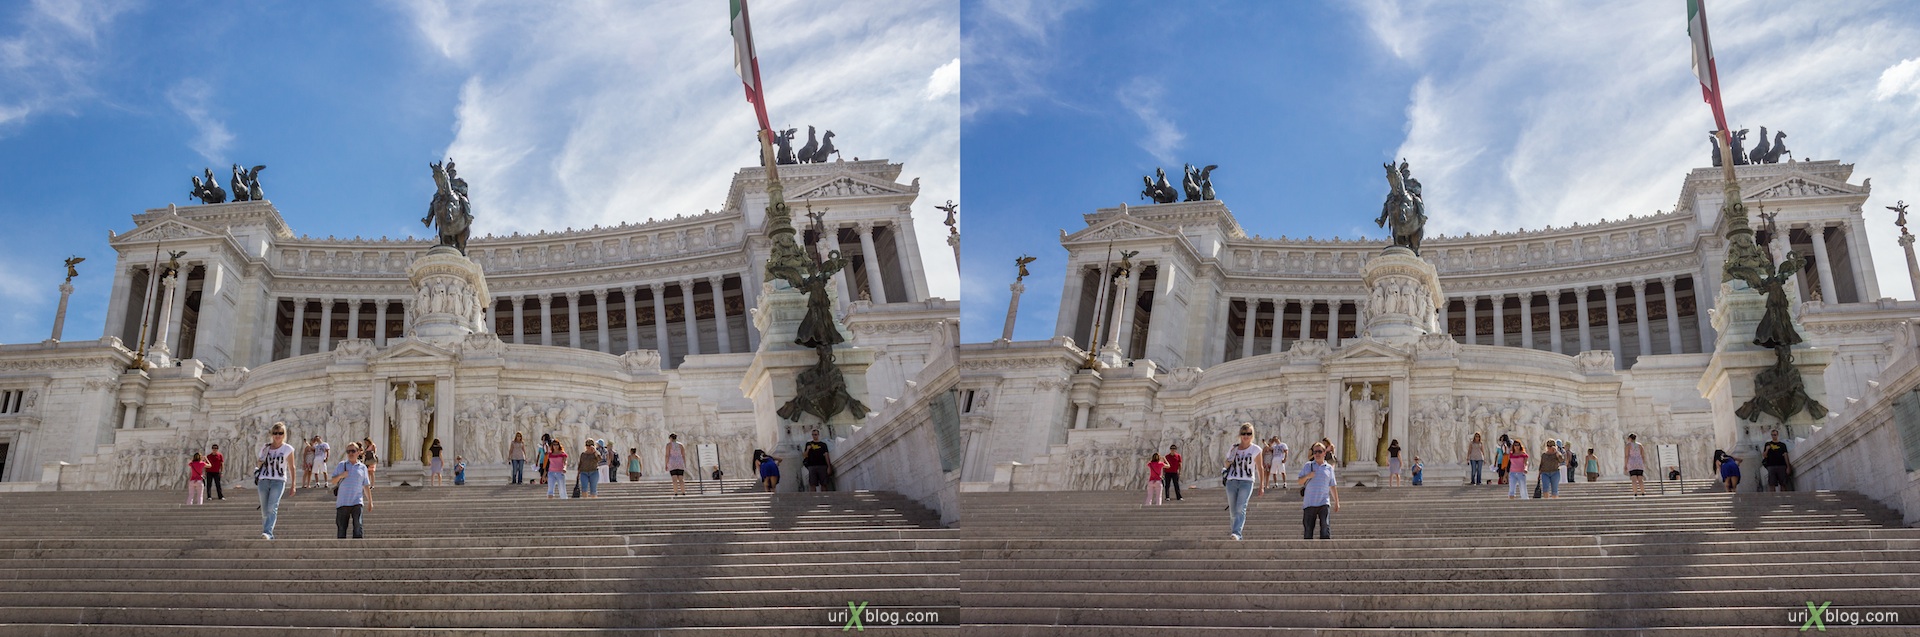 2012, the Vittoriano (Monument of Vittorio Emanuele II), 3D, stereo pair, cross-eyed, crossview, cross view stereo pair